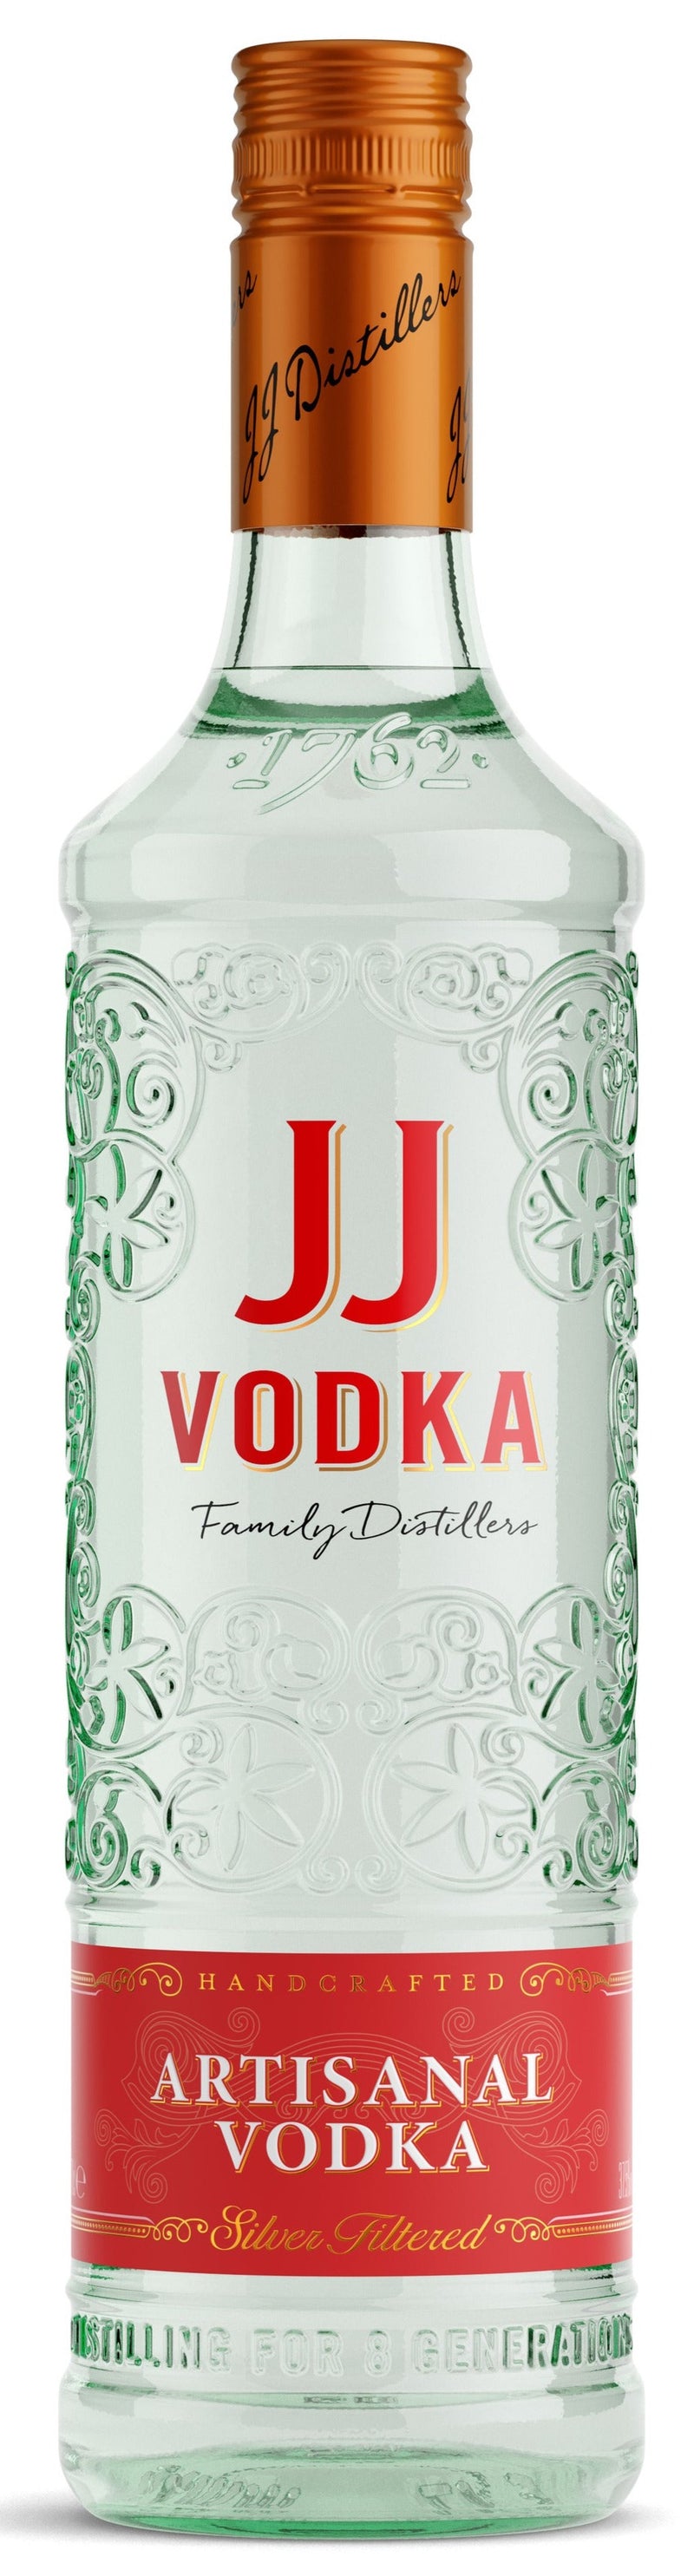 J.J. Whitley Artisanal Vodka 70cl